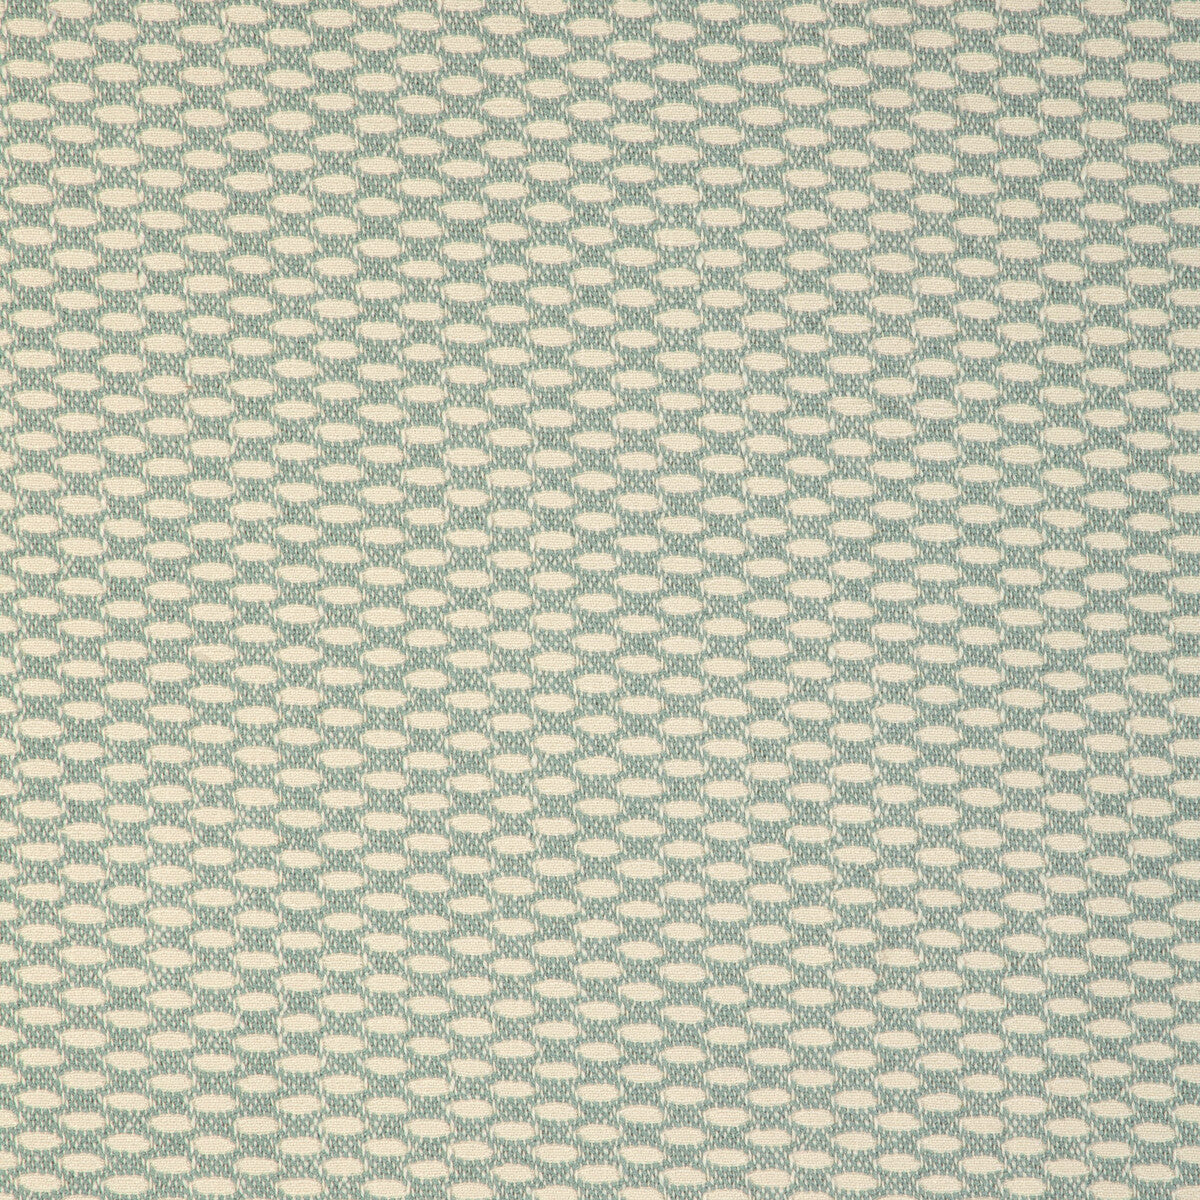 Kravet Smart fabric in 37005-15 color - pattern 37005.15.0 - by Kravet Smart in the Pavilion collection